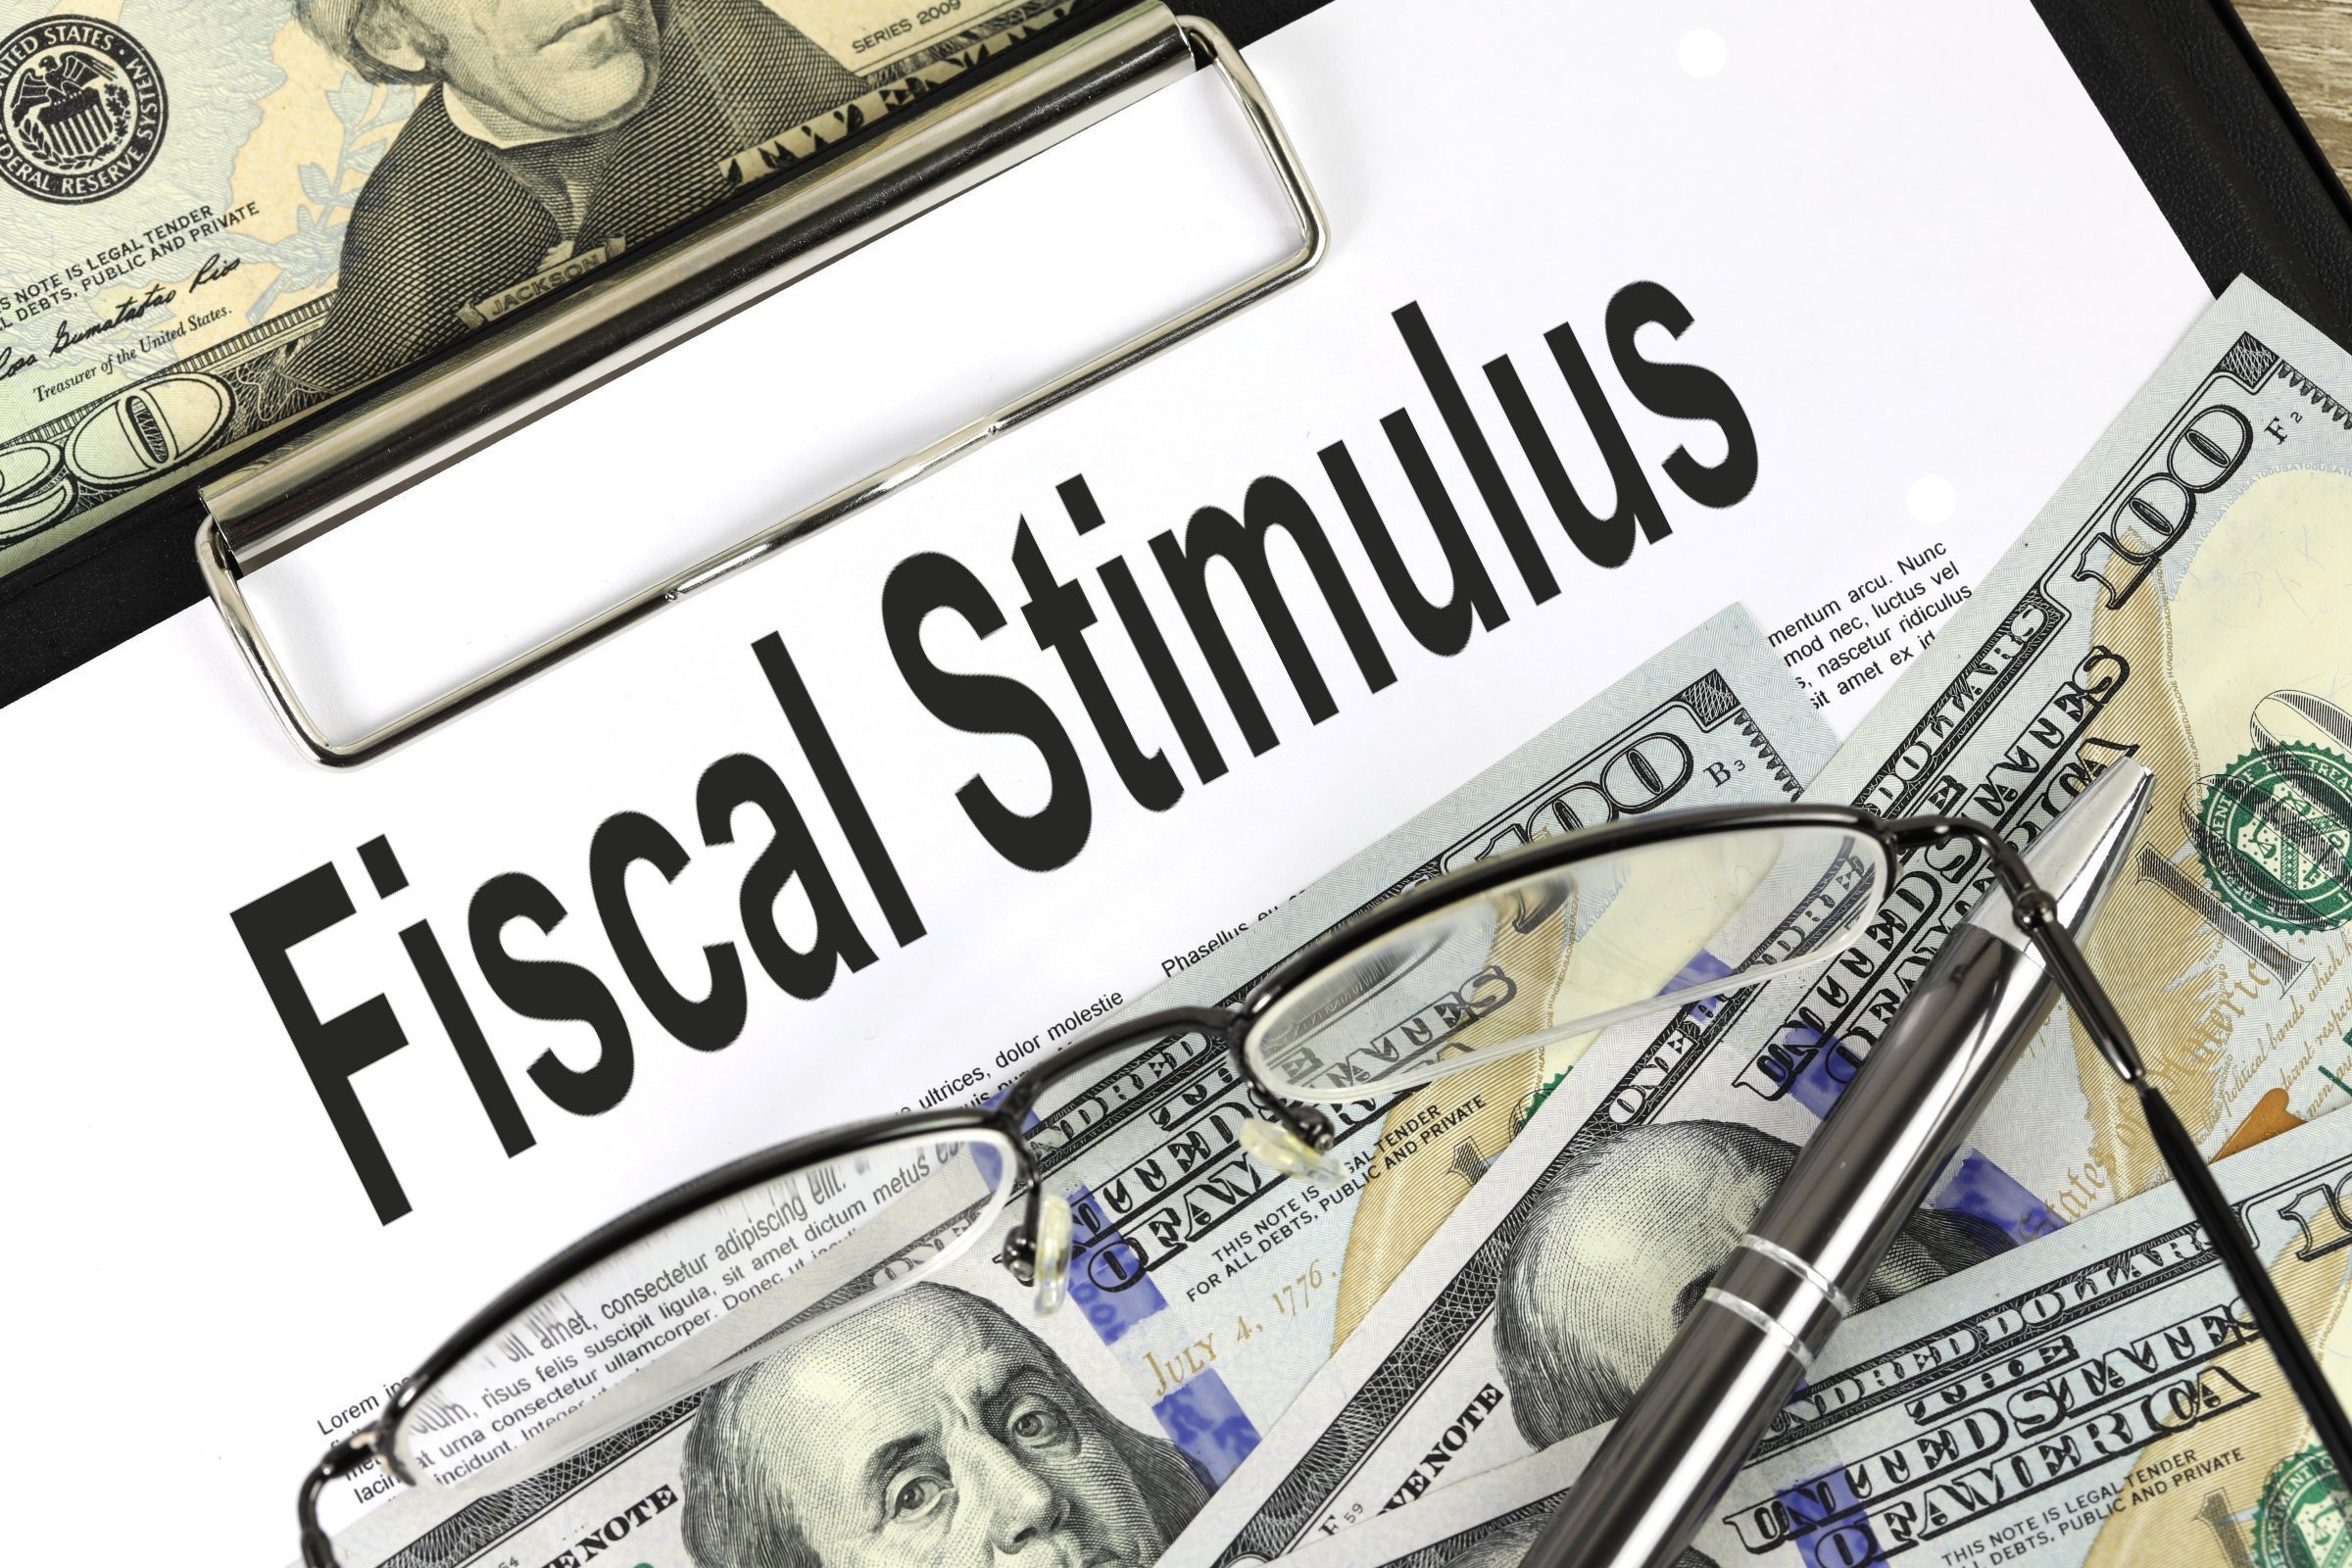 fiscal stimulus